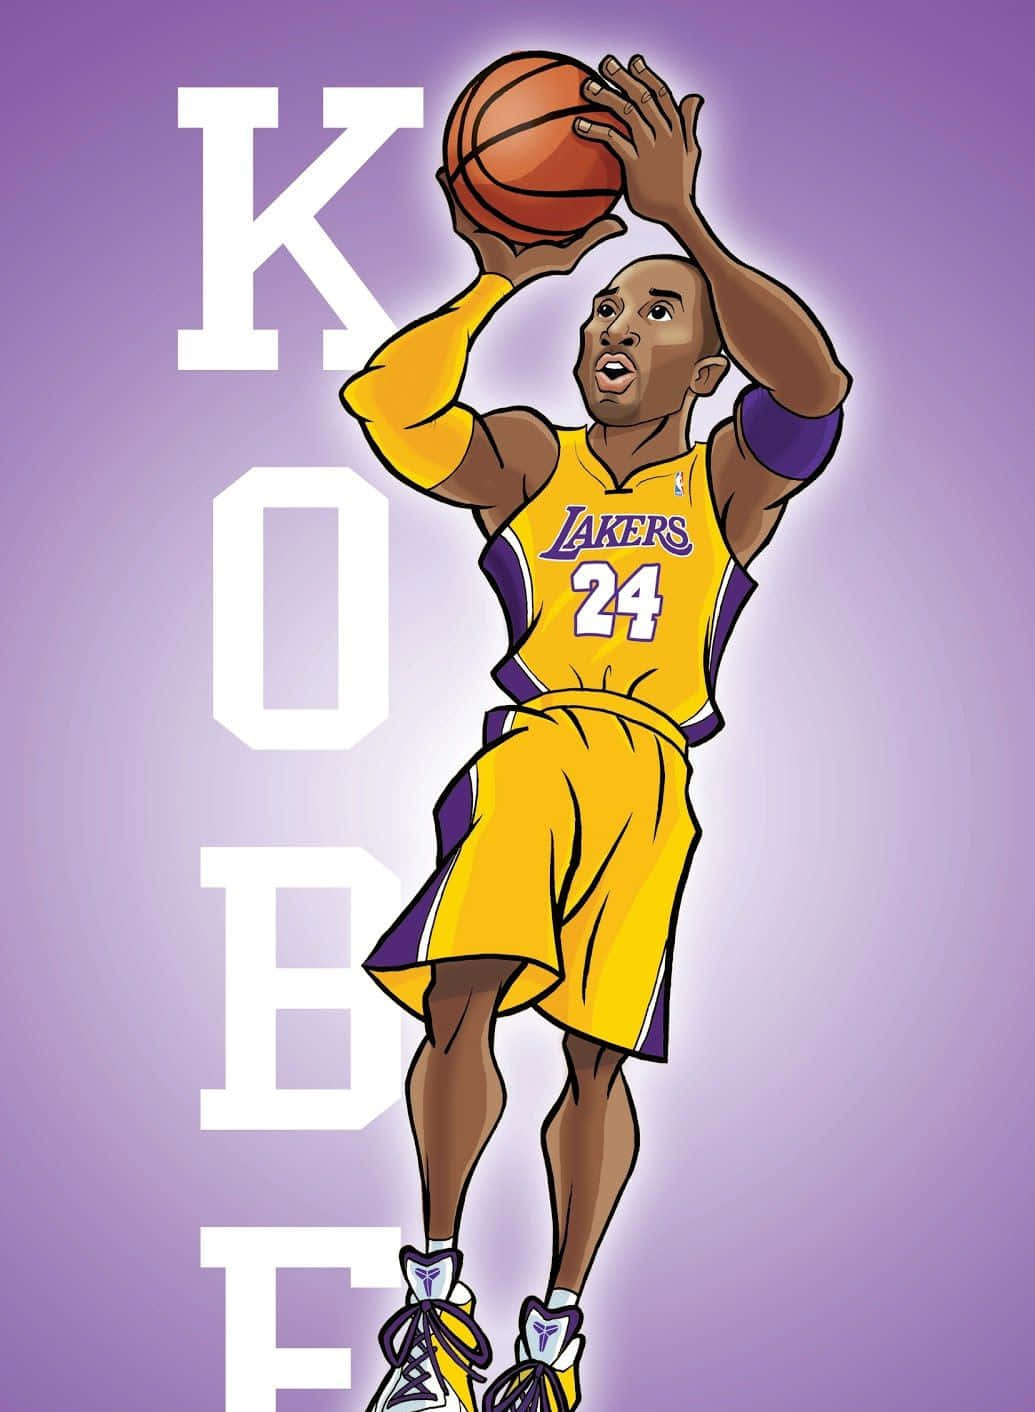 Legendärerspieler Der Los Angeles Lakers, Kobe Bryant.